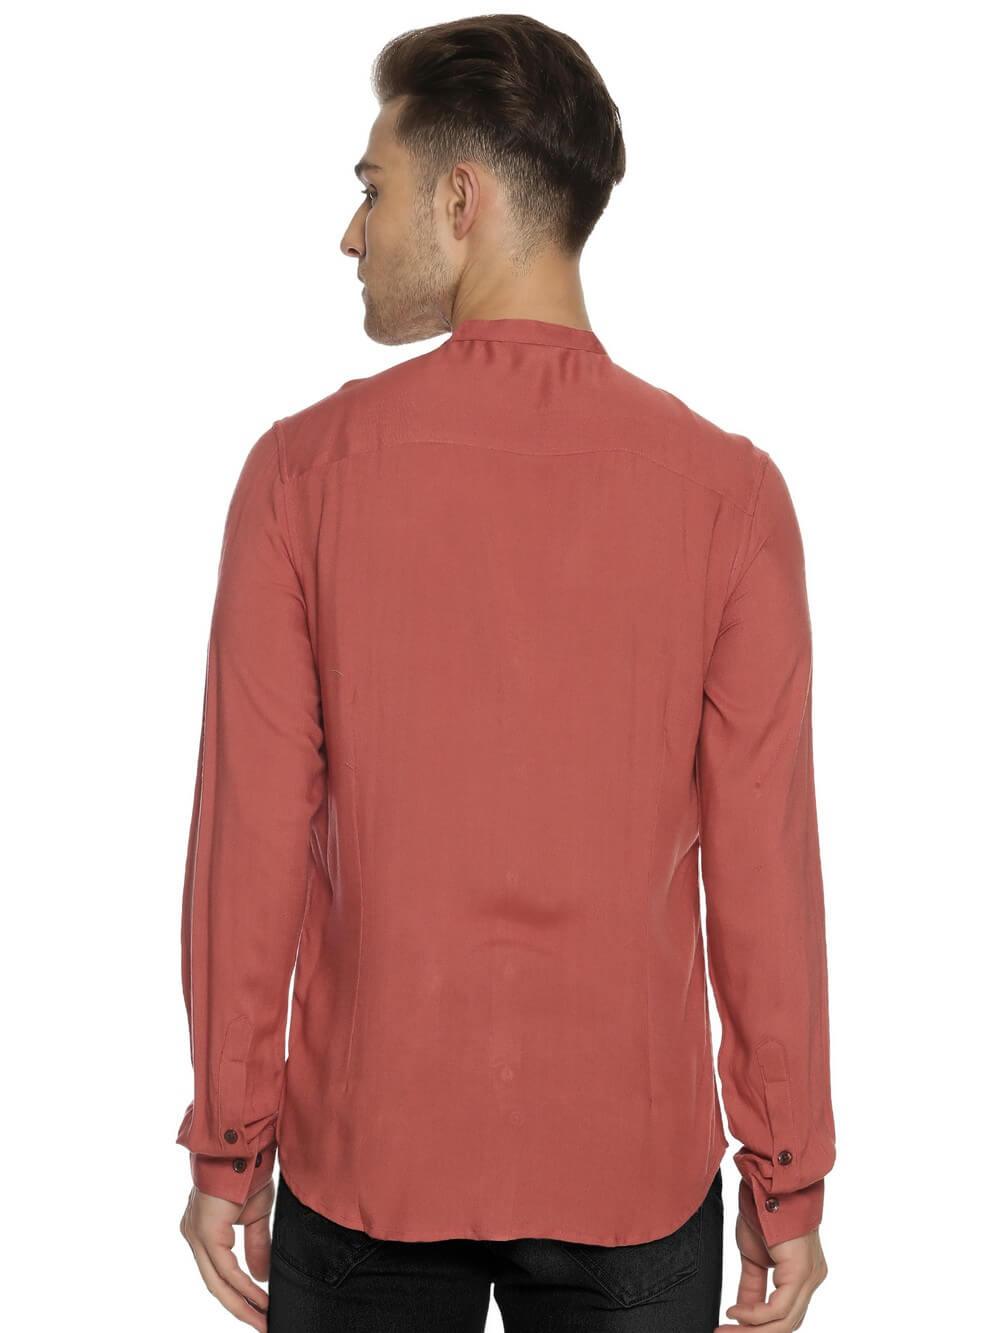 Rayon Pale Peach Ultra Soft Skinny Fit Full Sleeve Shirt WeaversKnot 